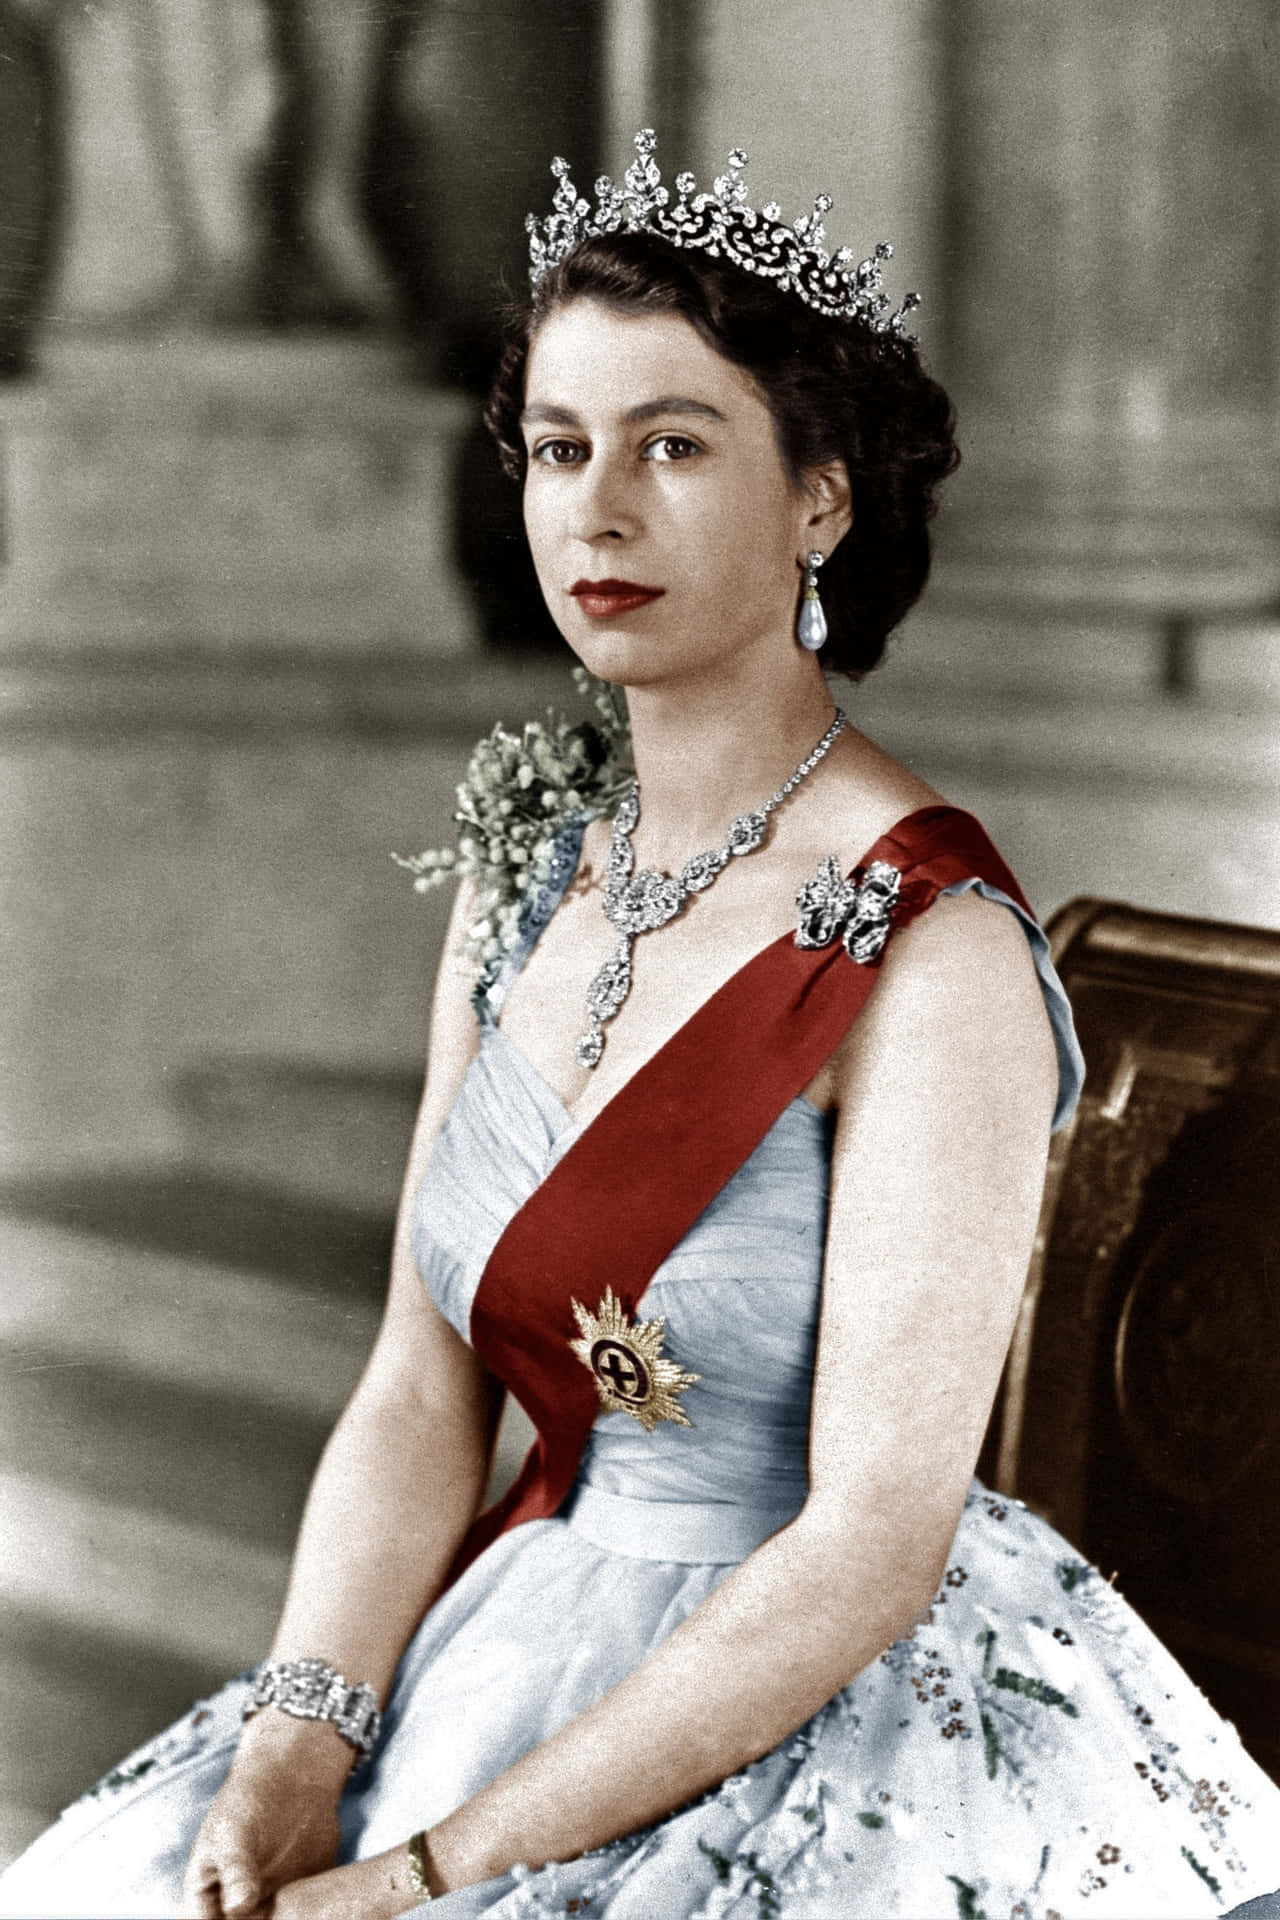 Her Majesty Queen Elizabeth II in Regal Attire